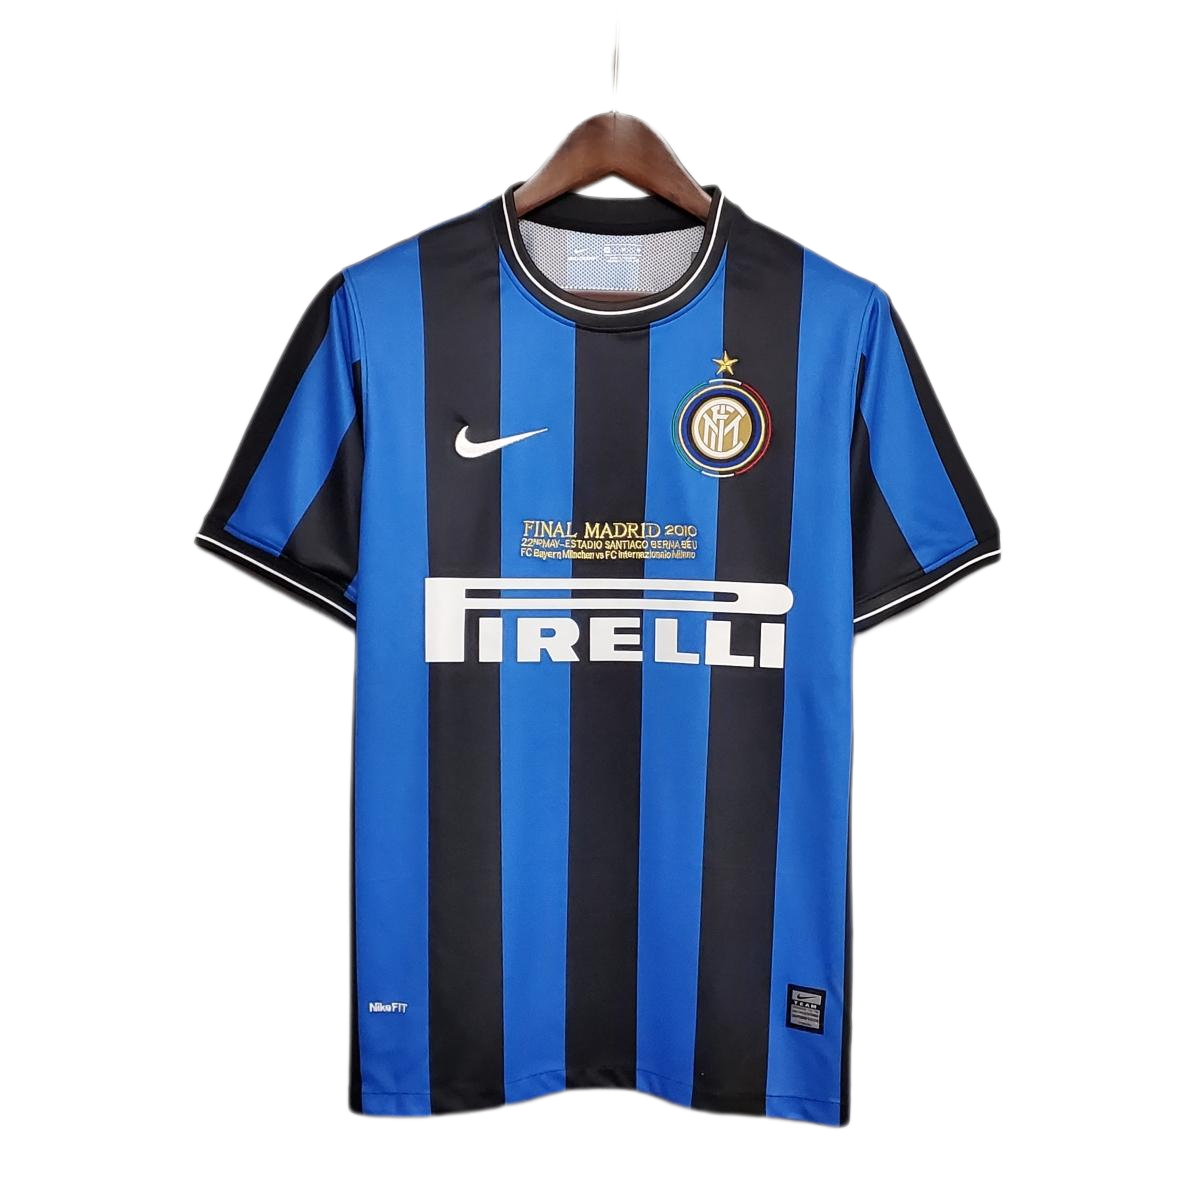 Retro 2010 Inter Milan Home Soccer Jersey